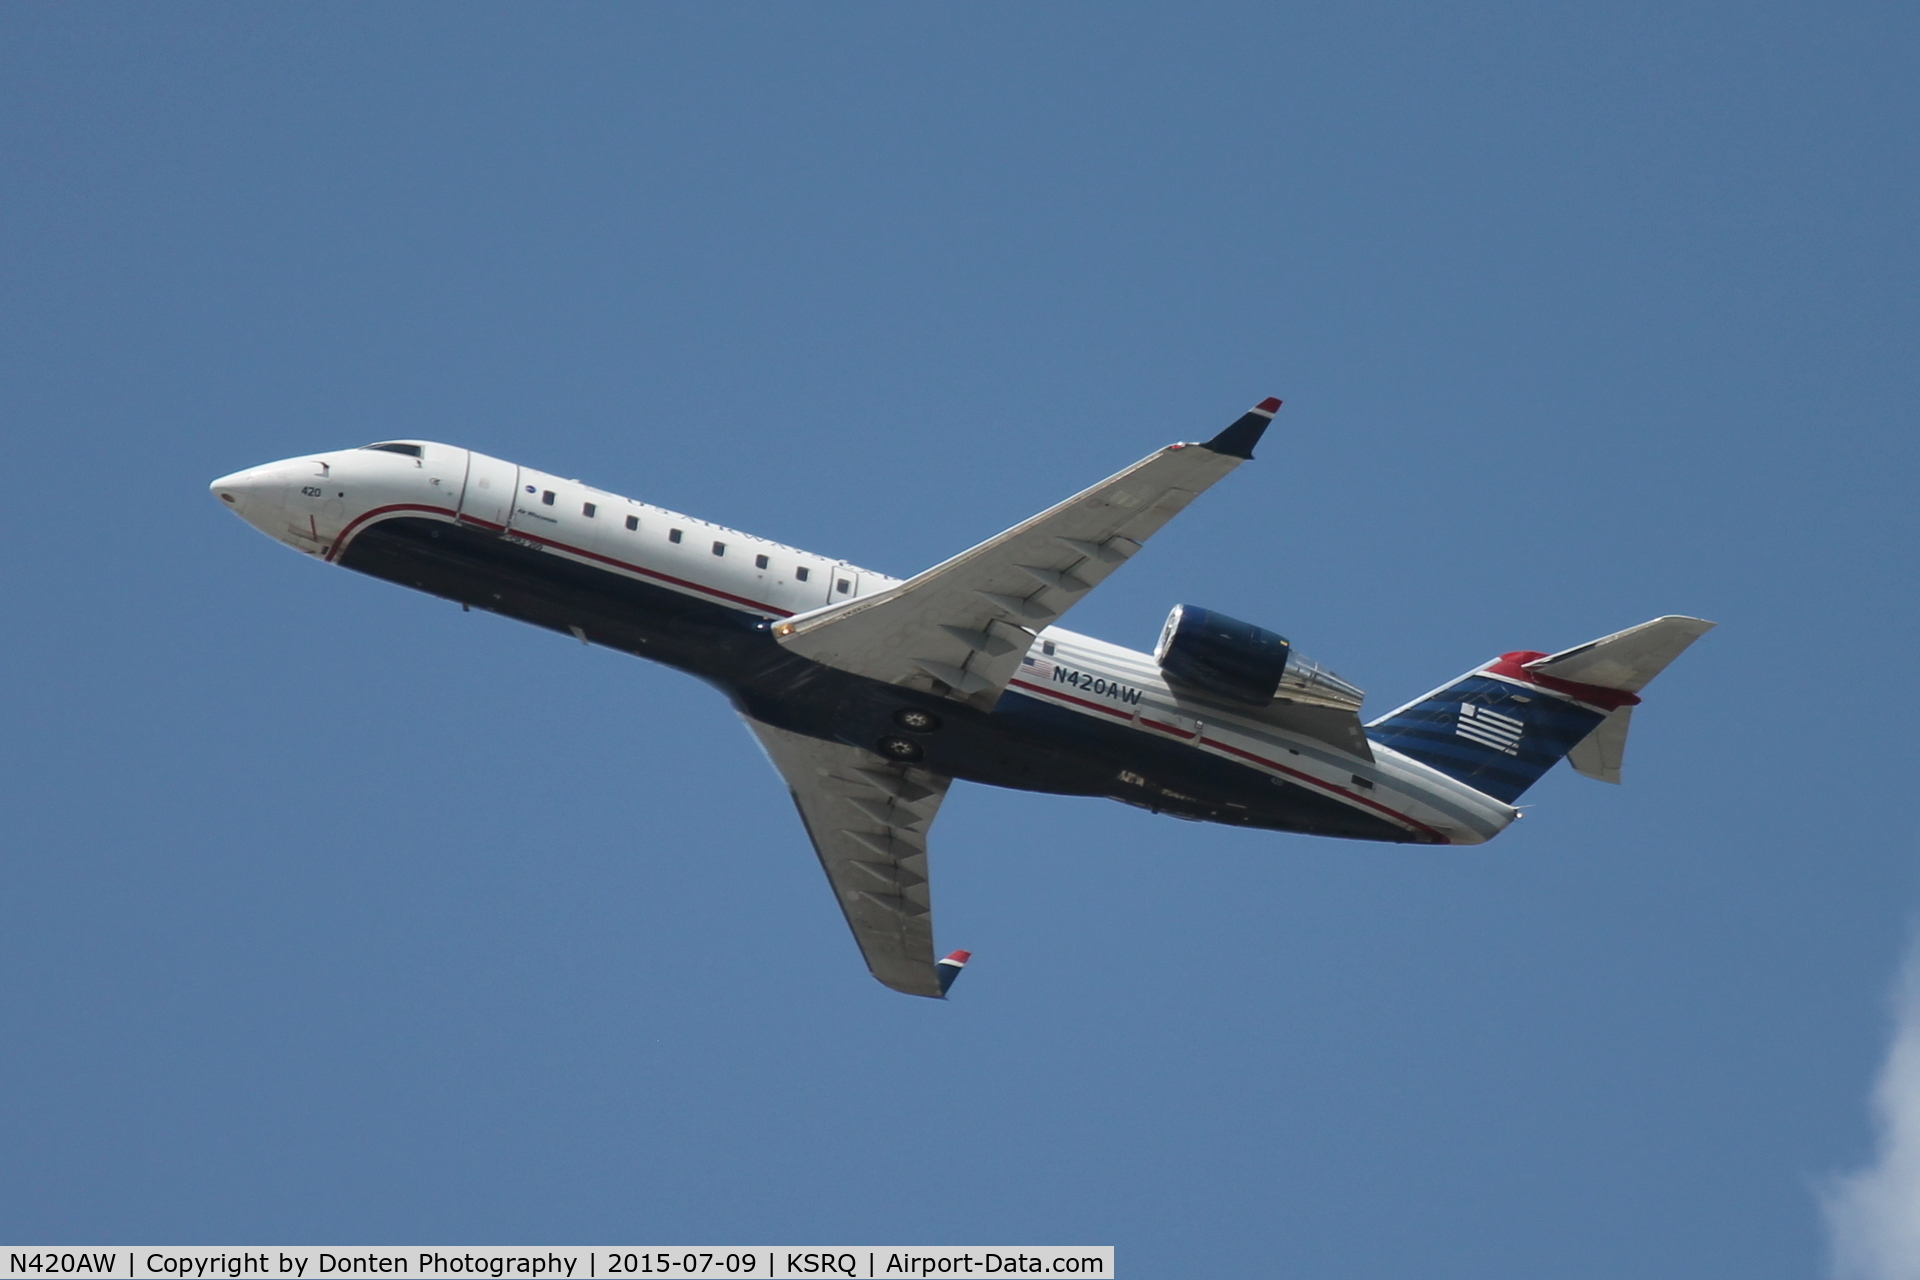 N420AW, 2002 Bombardier CRJ-200LR (CL-600-2B19) C/N 7640, American Flight 4024 operated by Air Wisconsin (N420AW) departs Sarasota-Bradenton International Airport enroute to Reagan National Airport